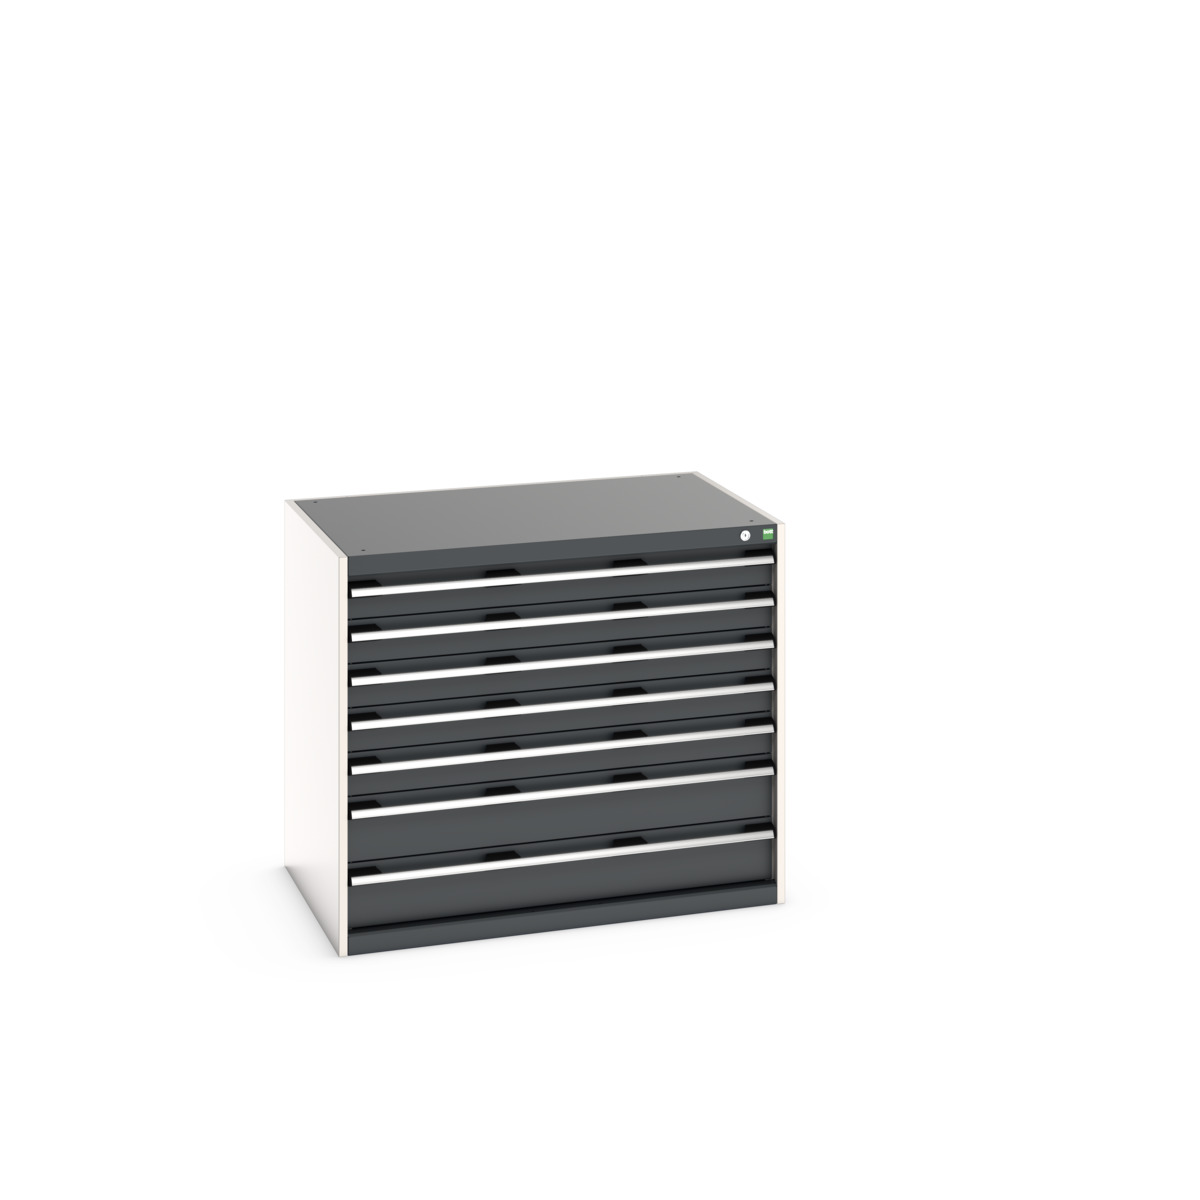 40029092. - cubio drawer cabinet